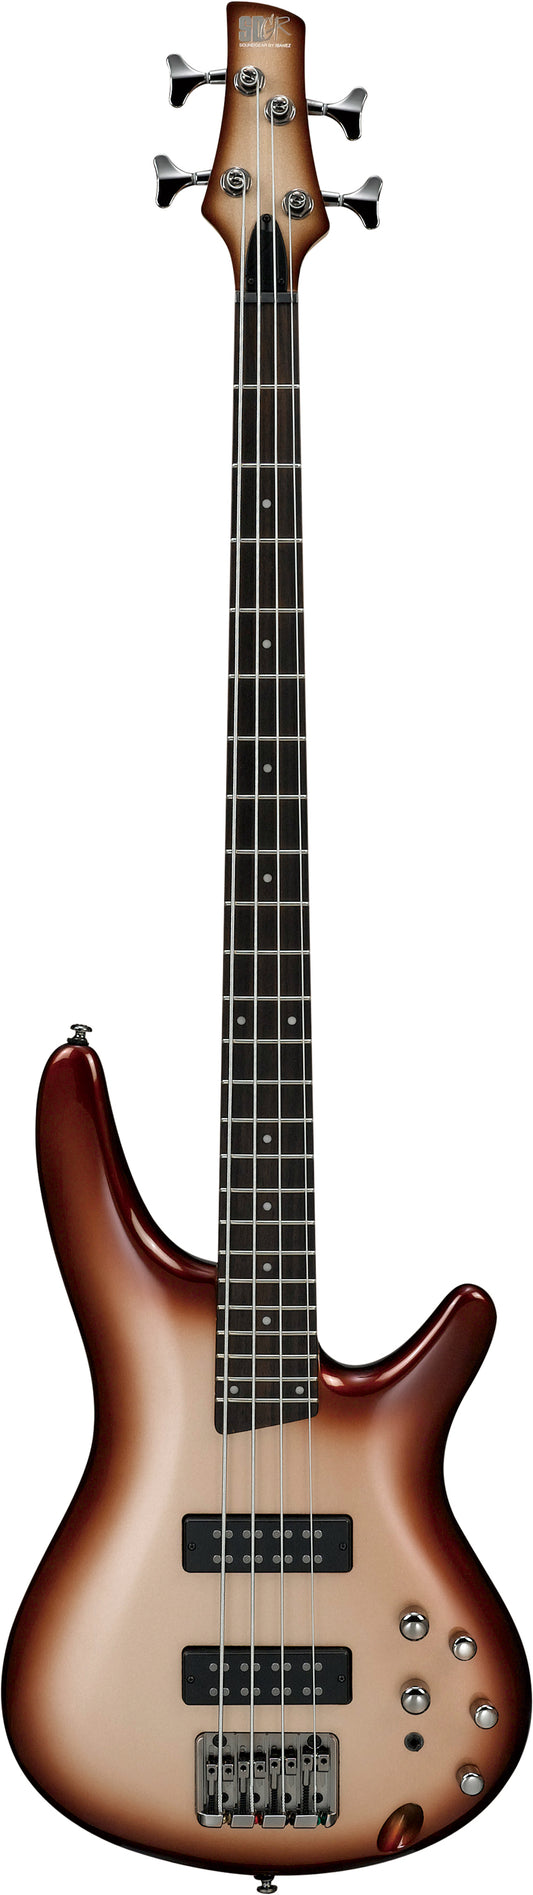 Ibanez SR300E 4 String Bass Guitar - Charred Champagne Burst